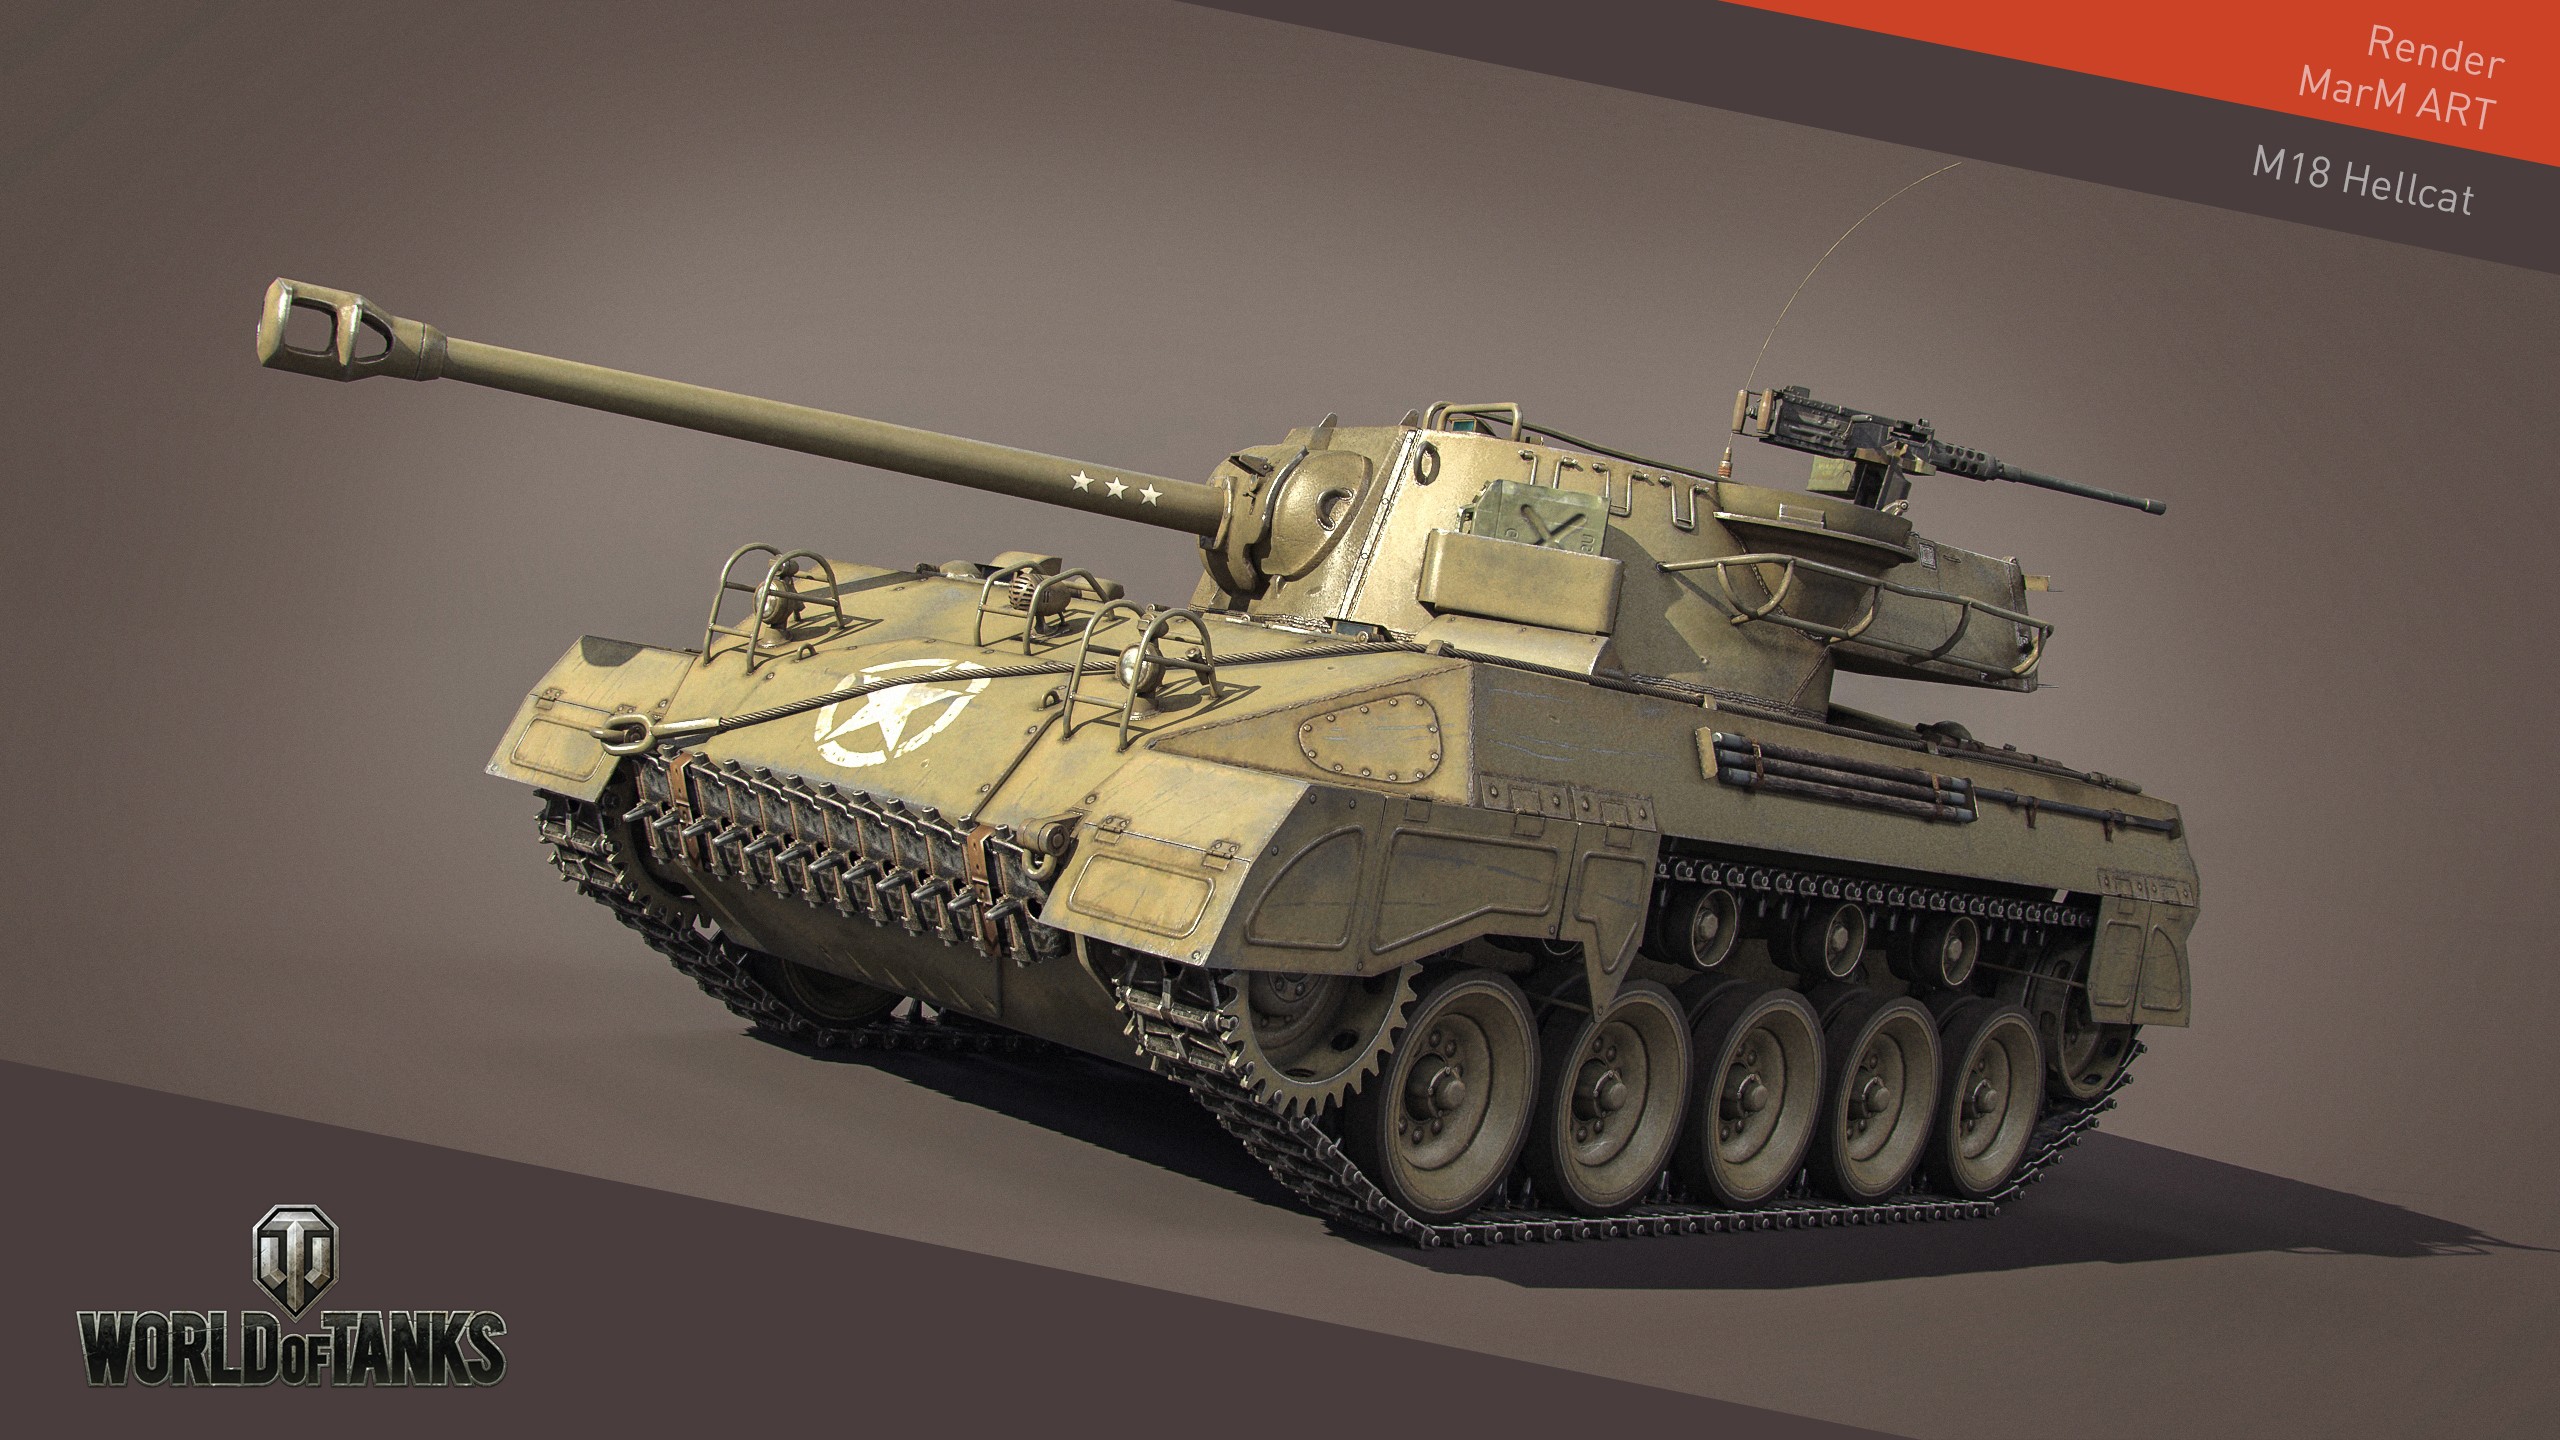 General 2560x1440 World of Tanks tank wargaming video games CGI M18 Hellcat